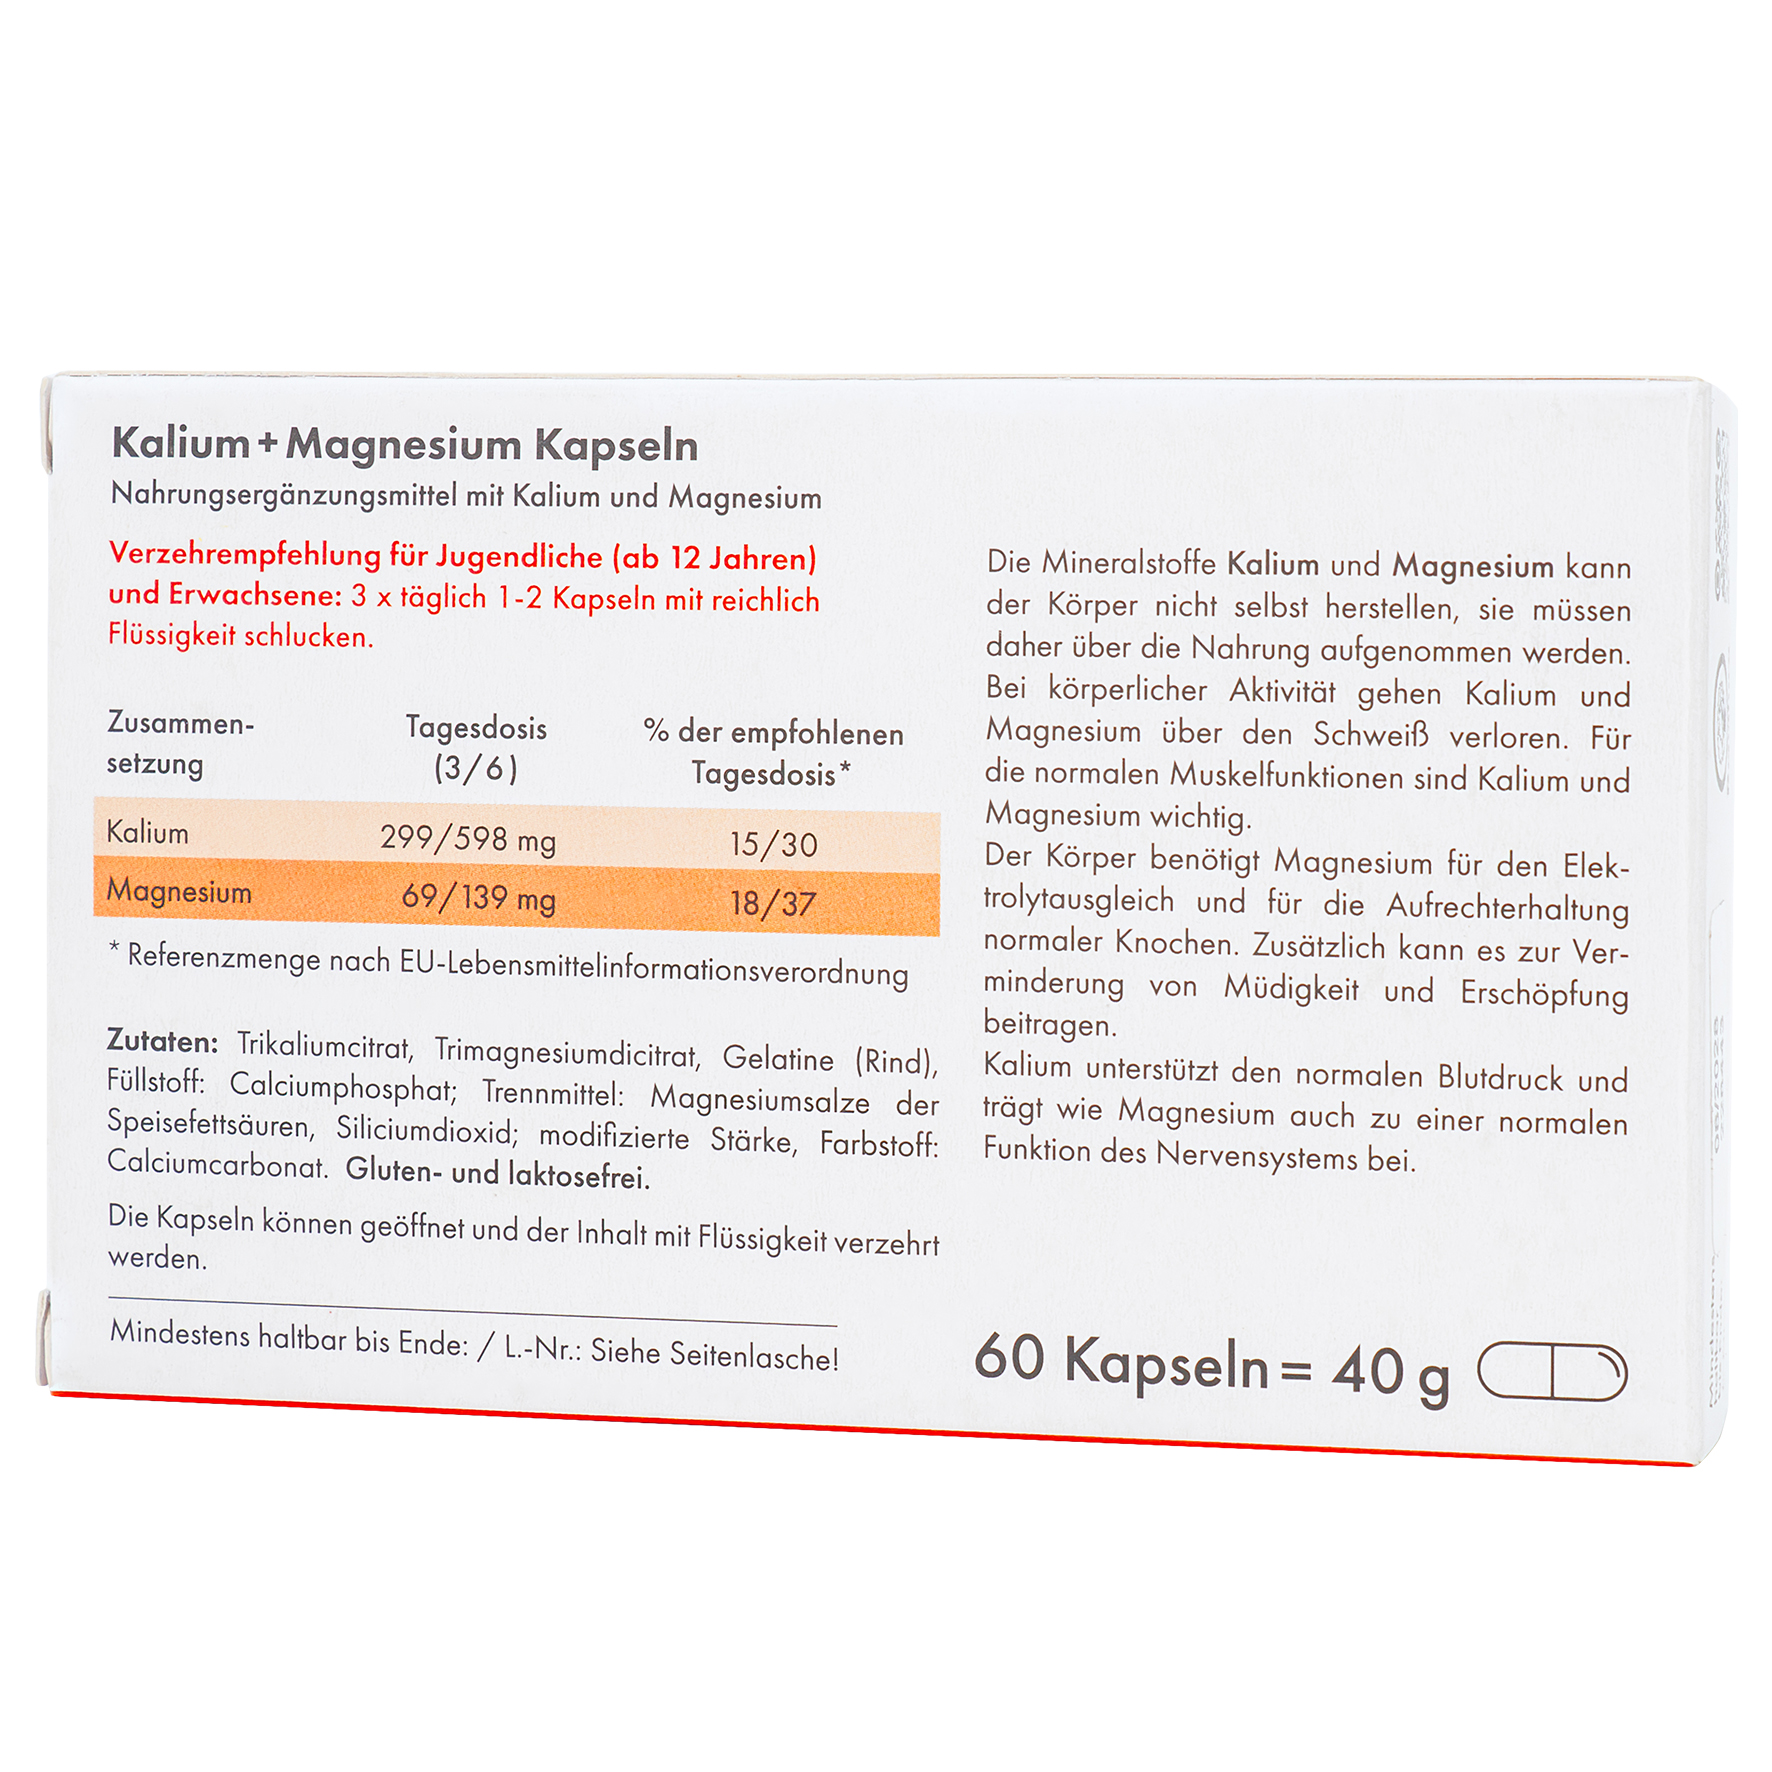 Kalium + Magnesium Kapseln